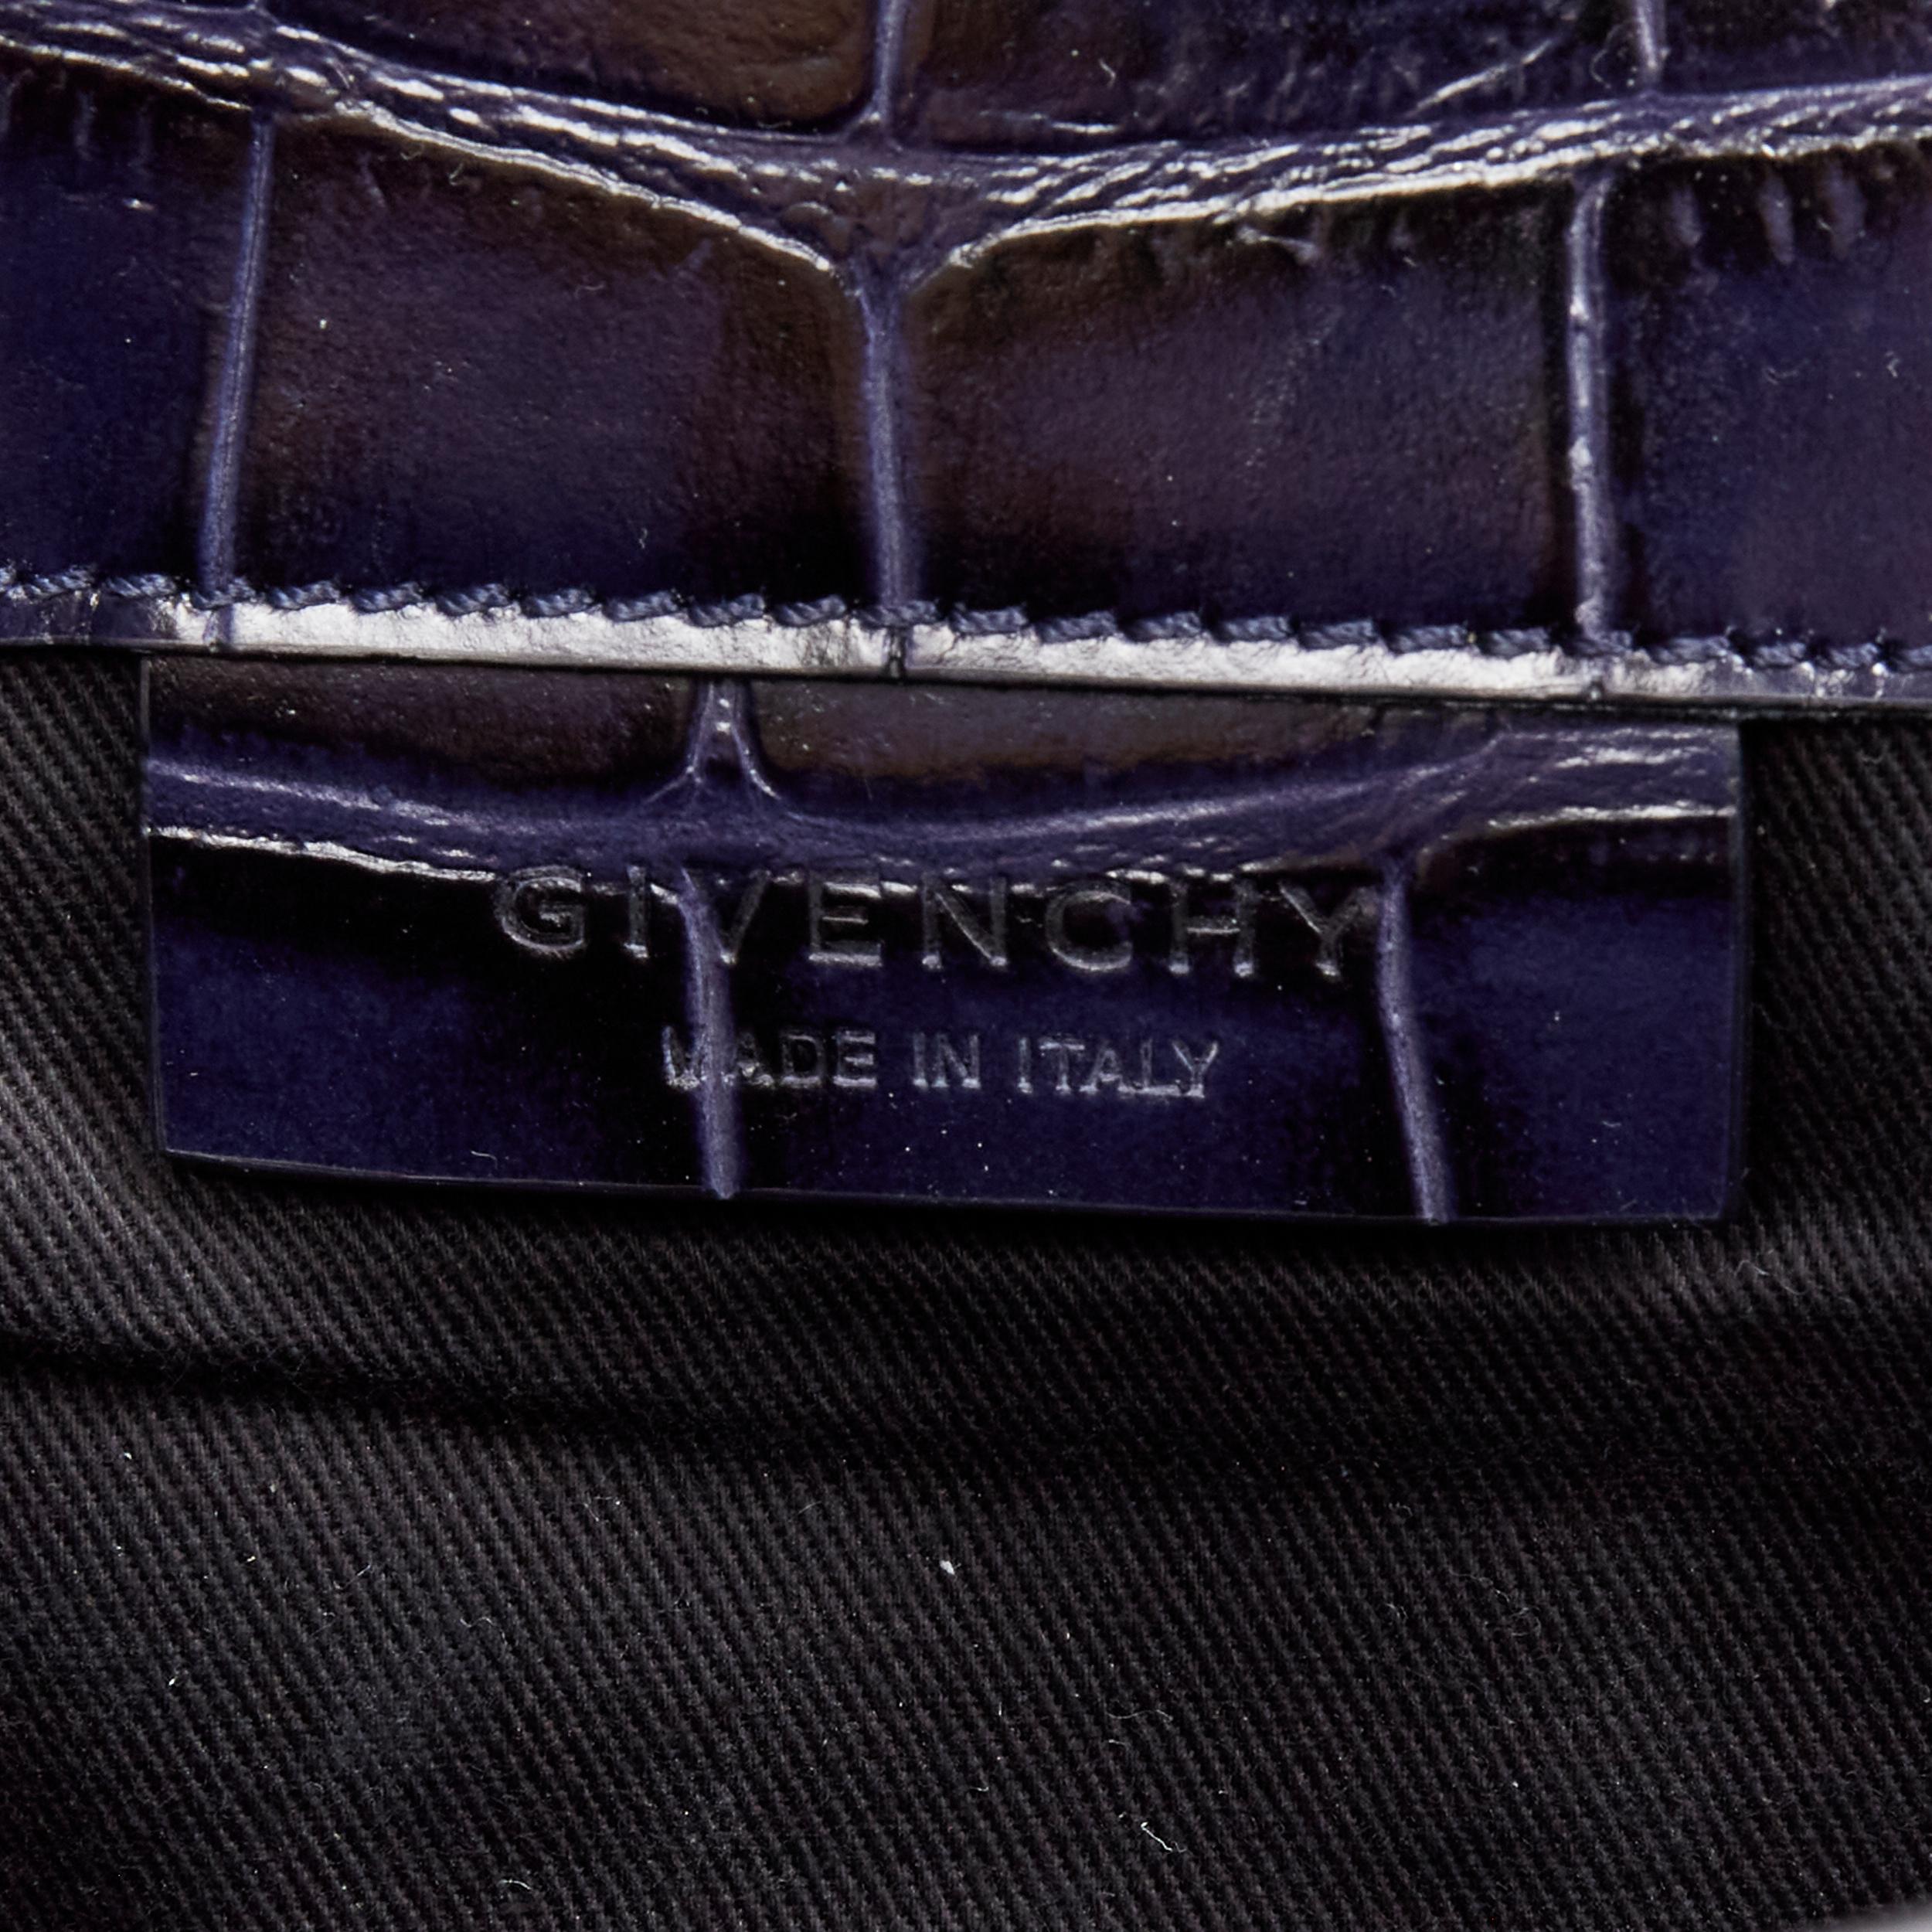 GIVENCHY Antigona navy mock croc leather flap envelope clutch bag 2